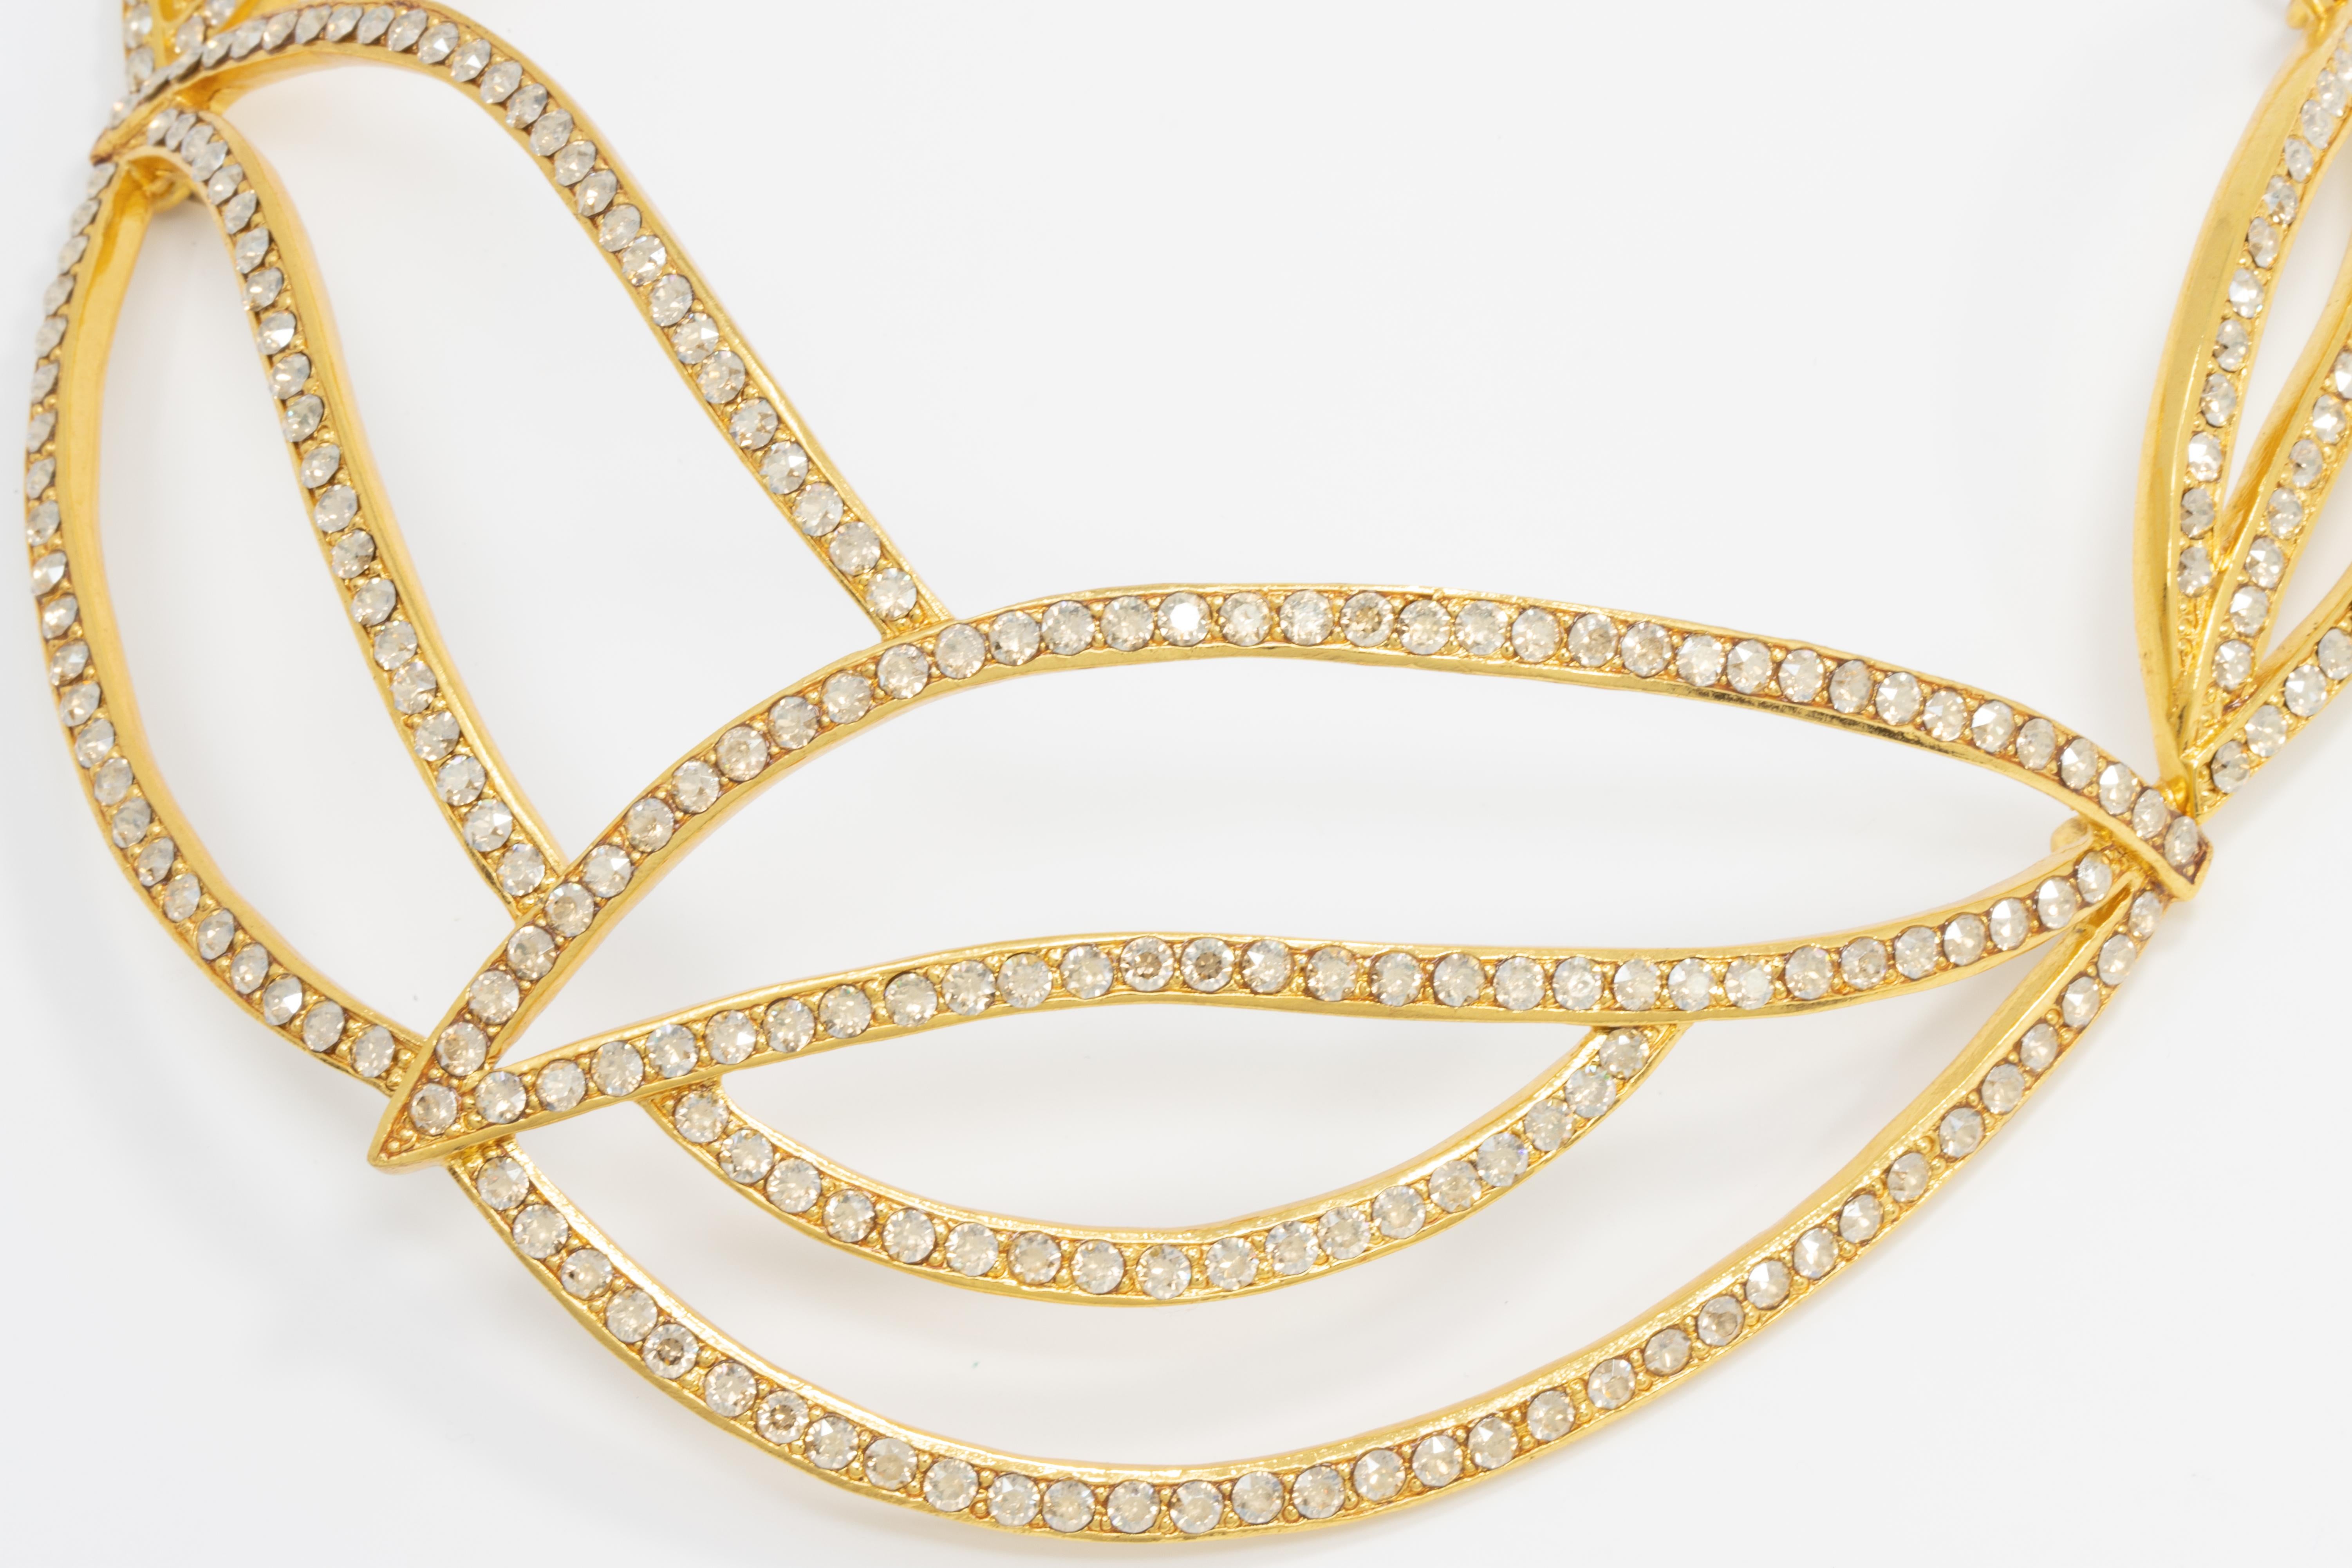 An elegant collar necklace from Oscar de la Renta, lined with smoky, topaz-colored, Swarovski crystals.

Yellow gold-plated.

Length: 14.5 inches

Hallmarks: Oscar de la Renta, Made in USA